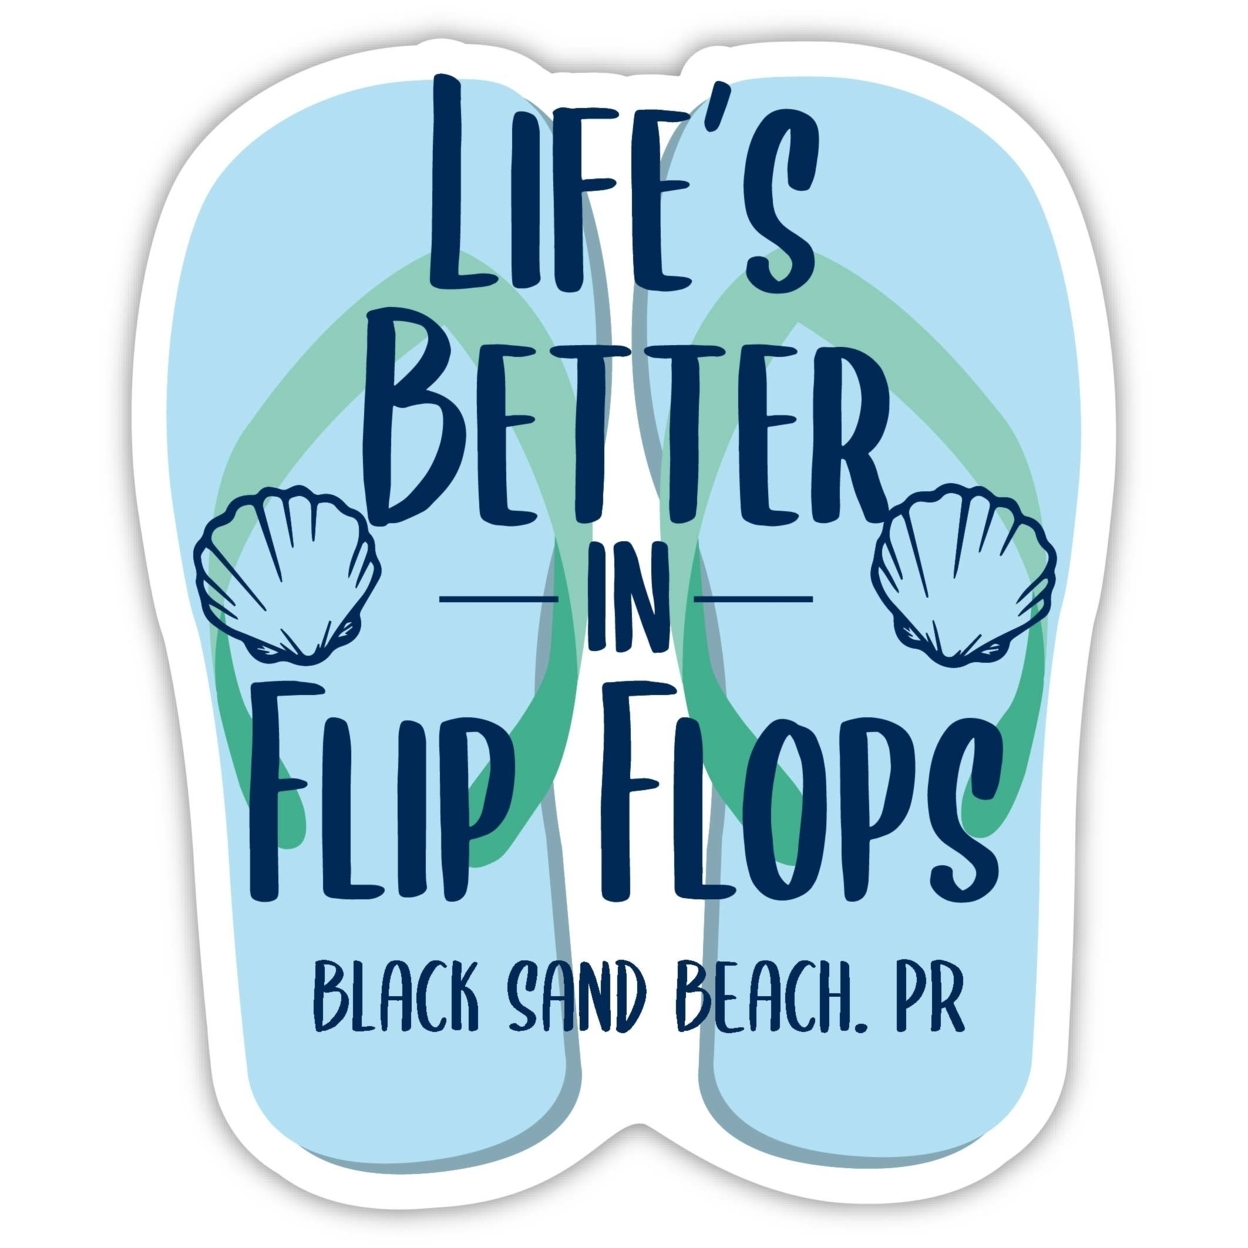 Black Sand Beach Puerto Rico Souvenir 4 Inch Vinyl Decal Sticker Flip Flop Design